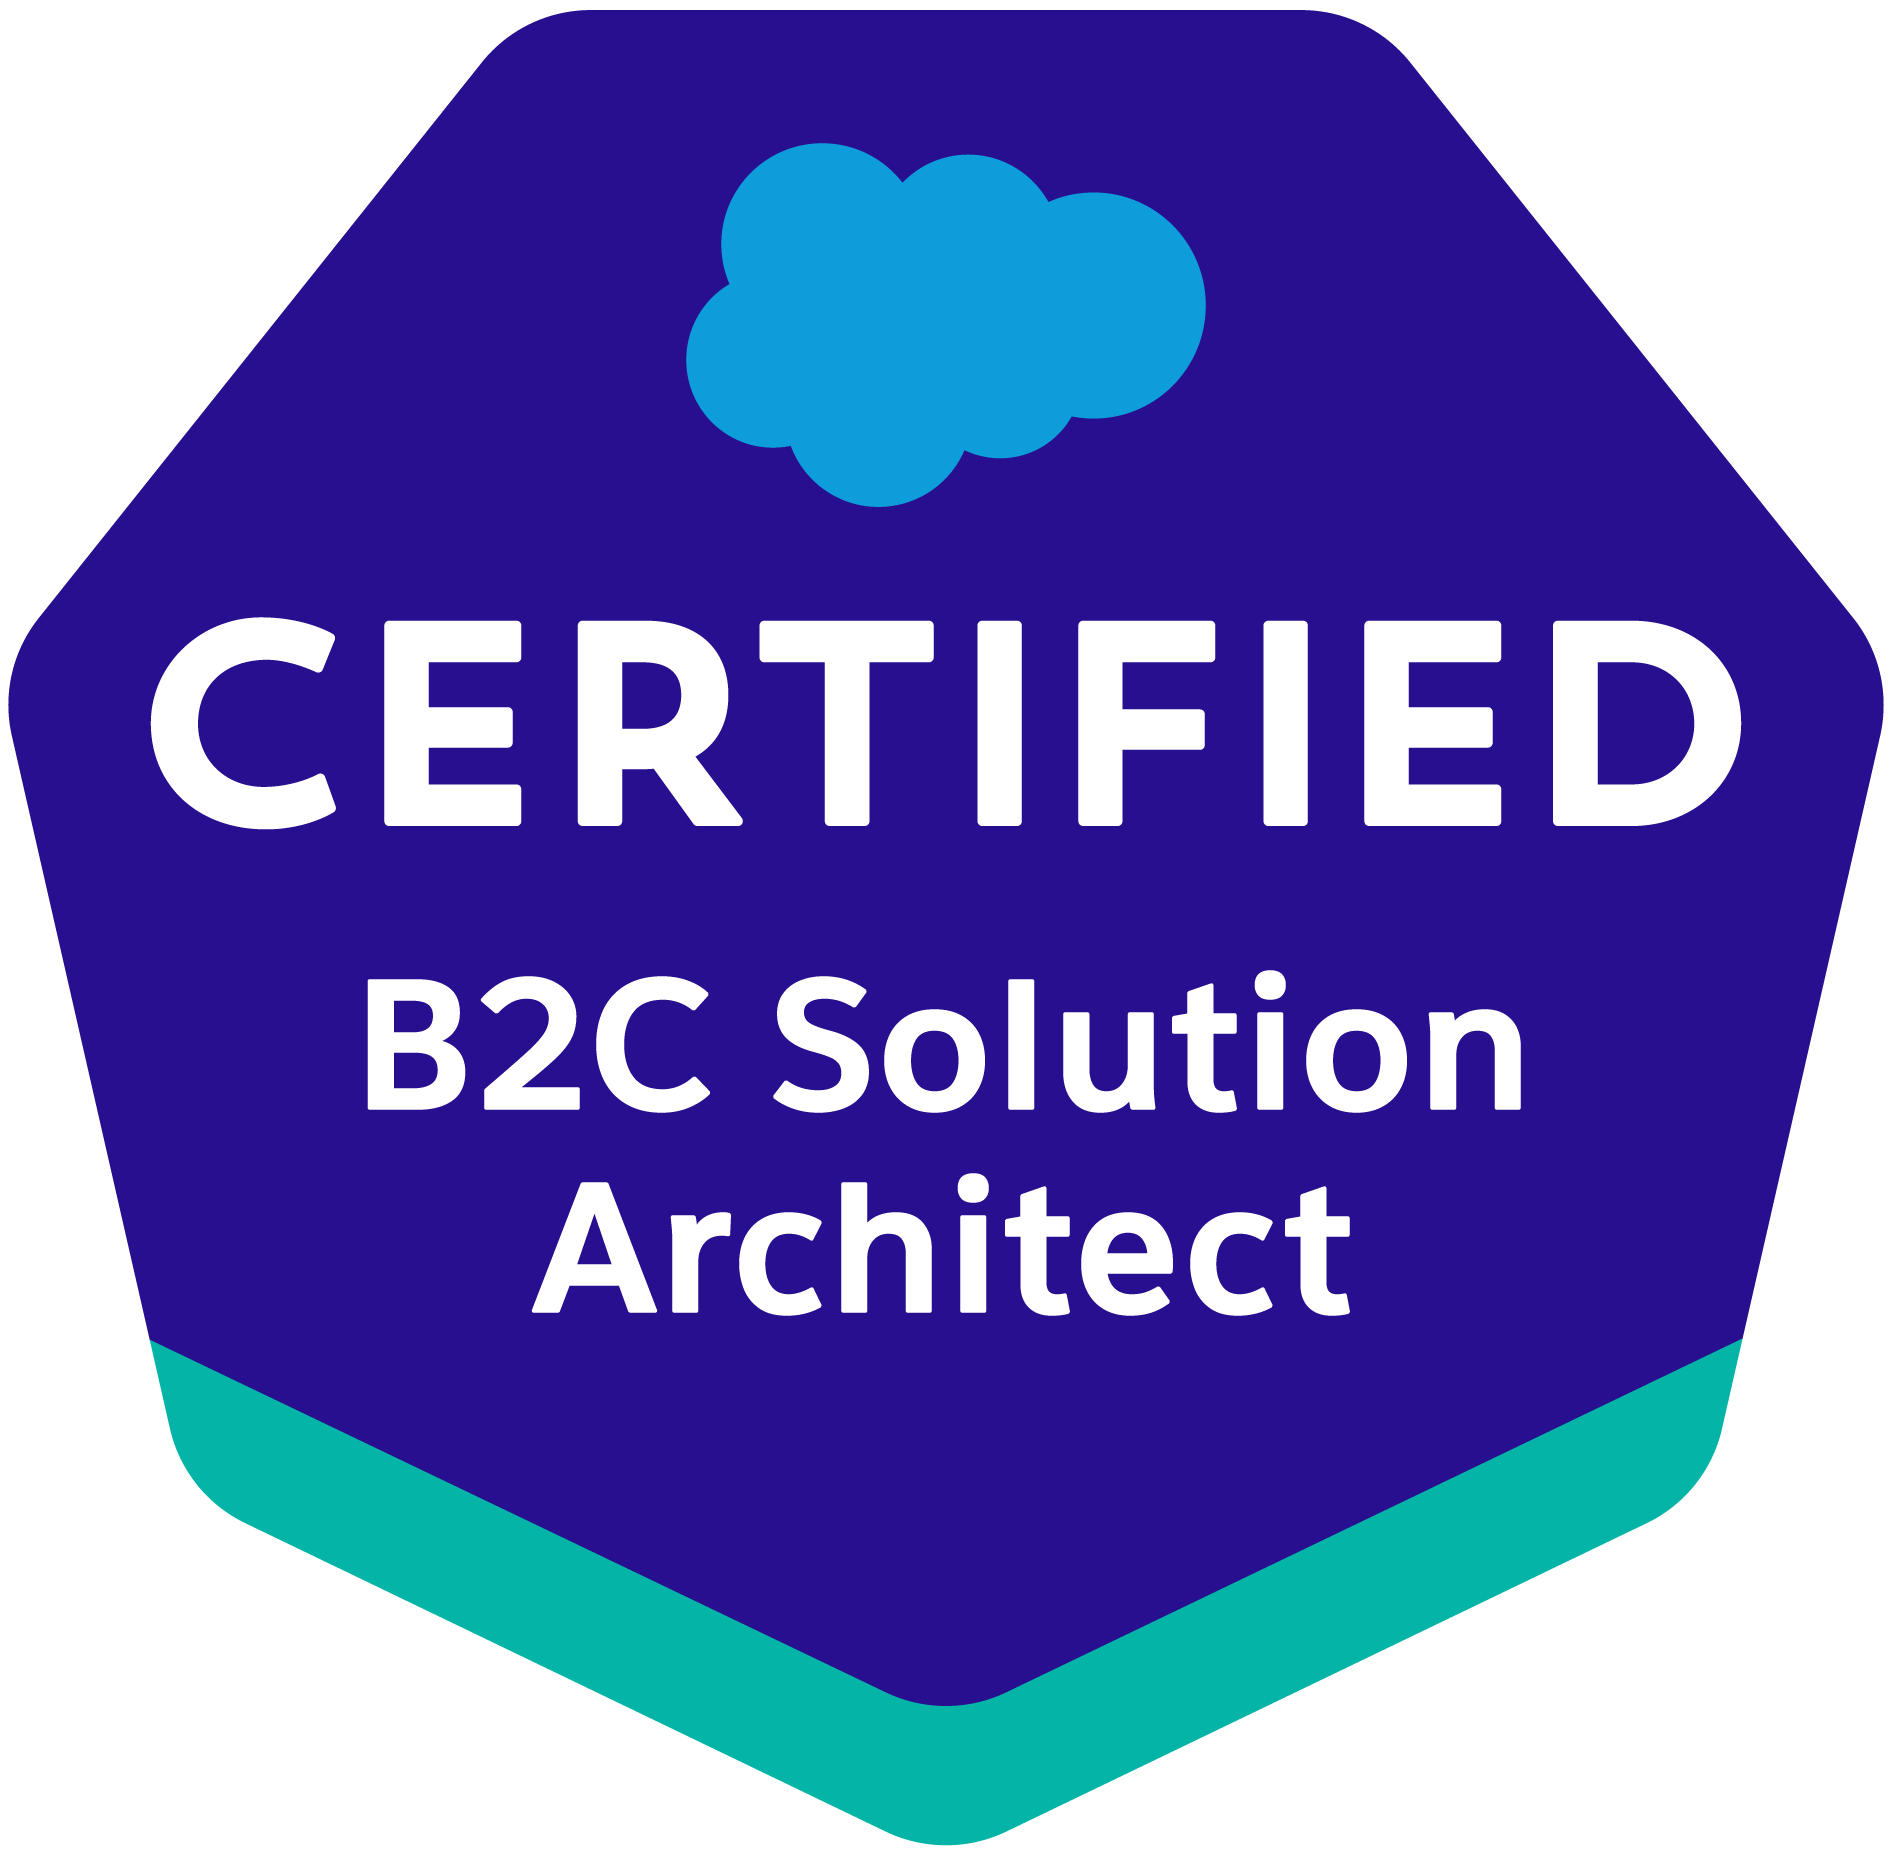 B2C Solution Architect certification